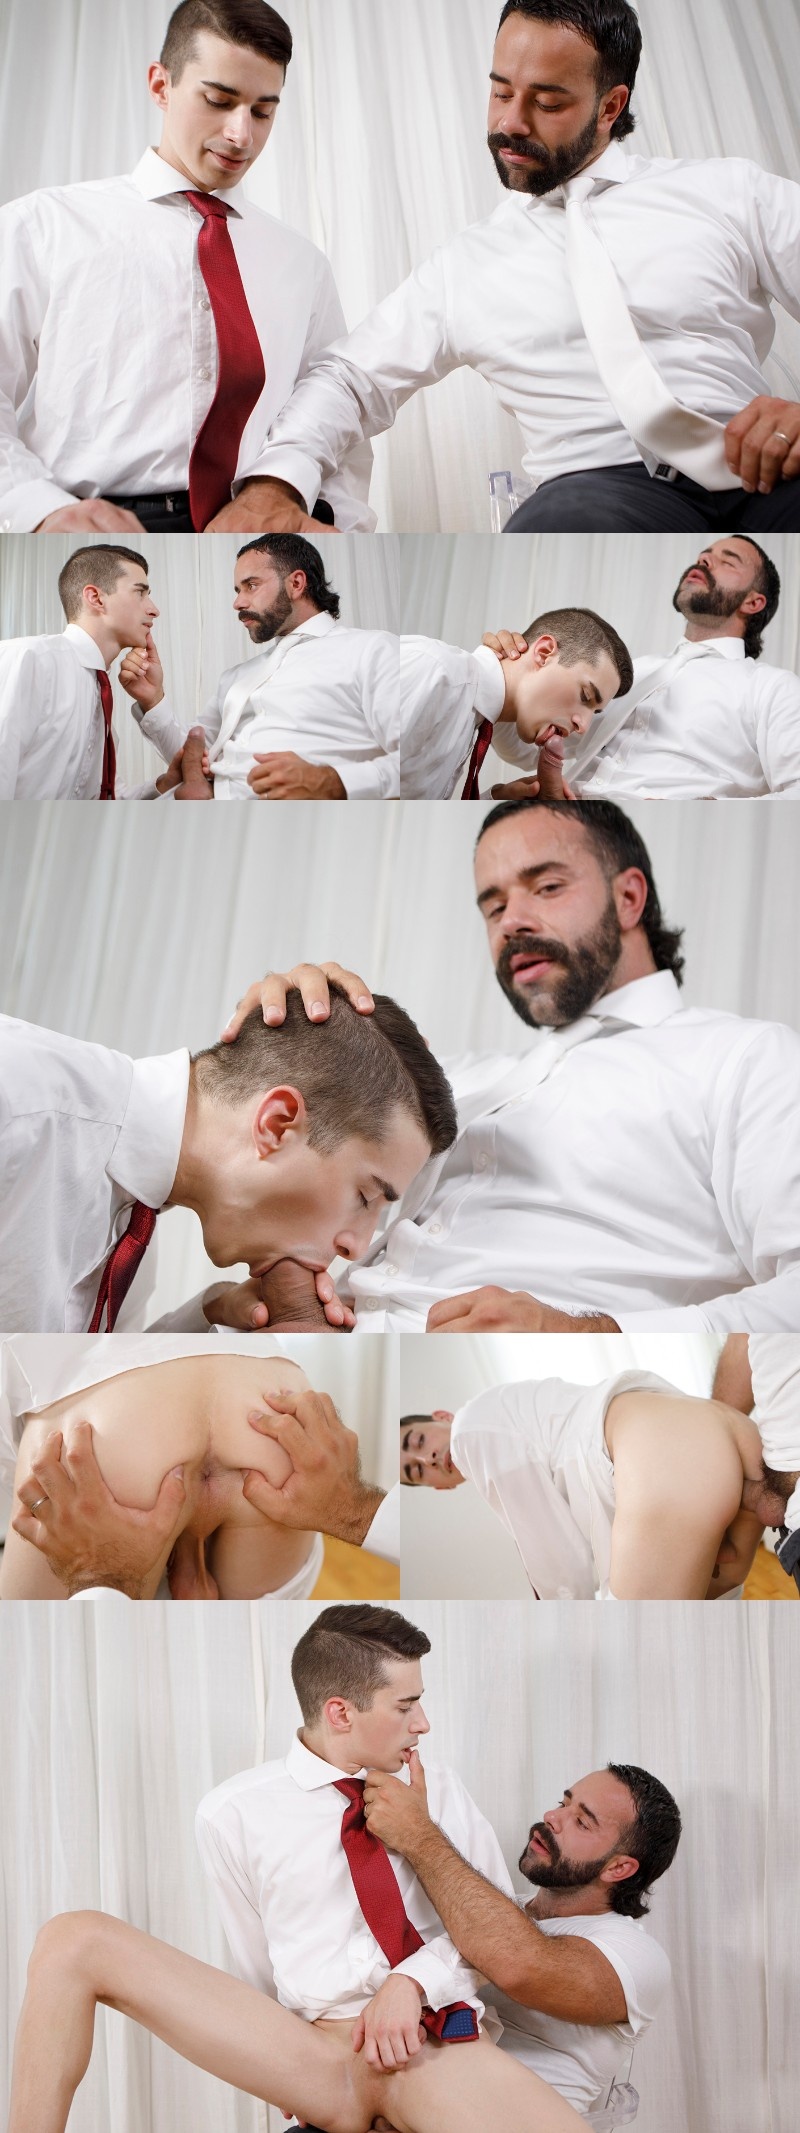 Hairy Mormon Bounces Dirty Boy on His Fat Uncut Cock